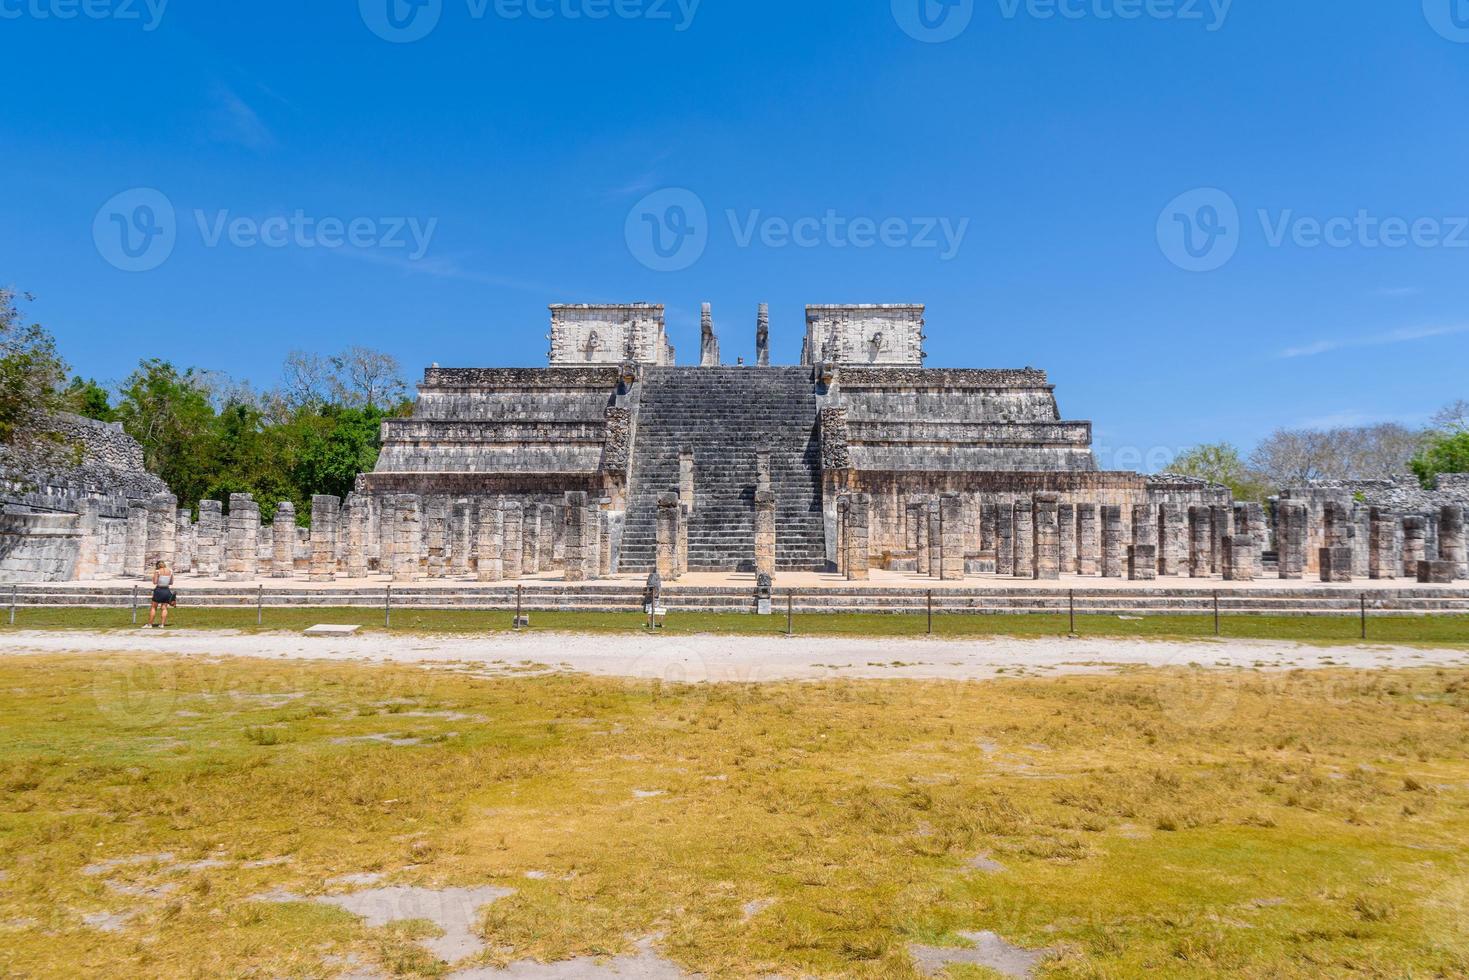 krigarnas tempel i chichen itza, quintana roo, mexiko. mayaruiner nära cancun foto